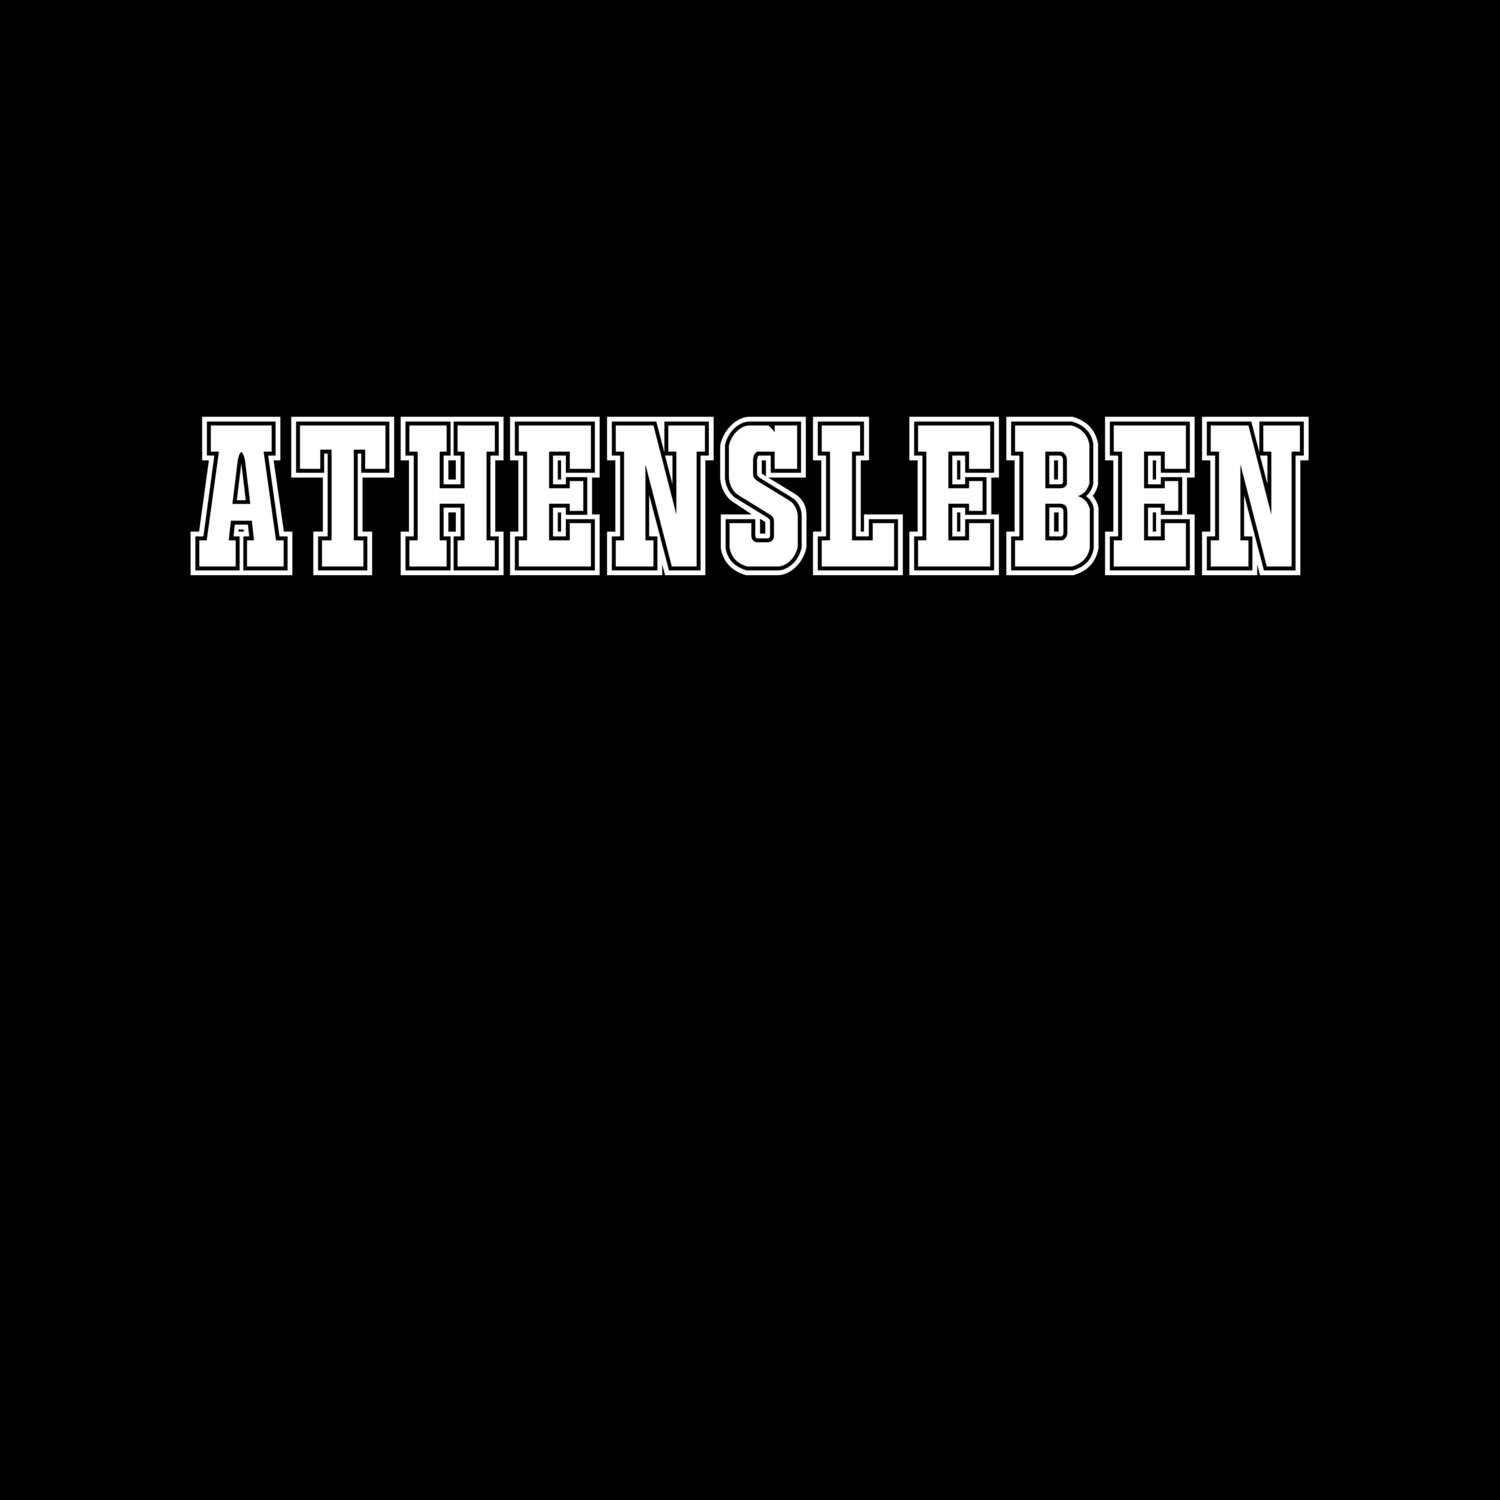 Athensleben T-Shirt »Classic«